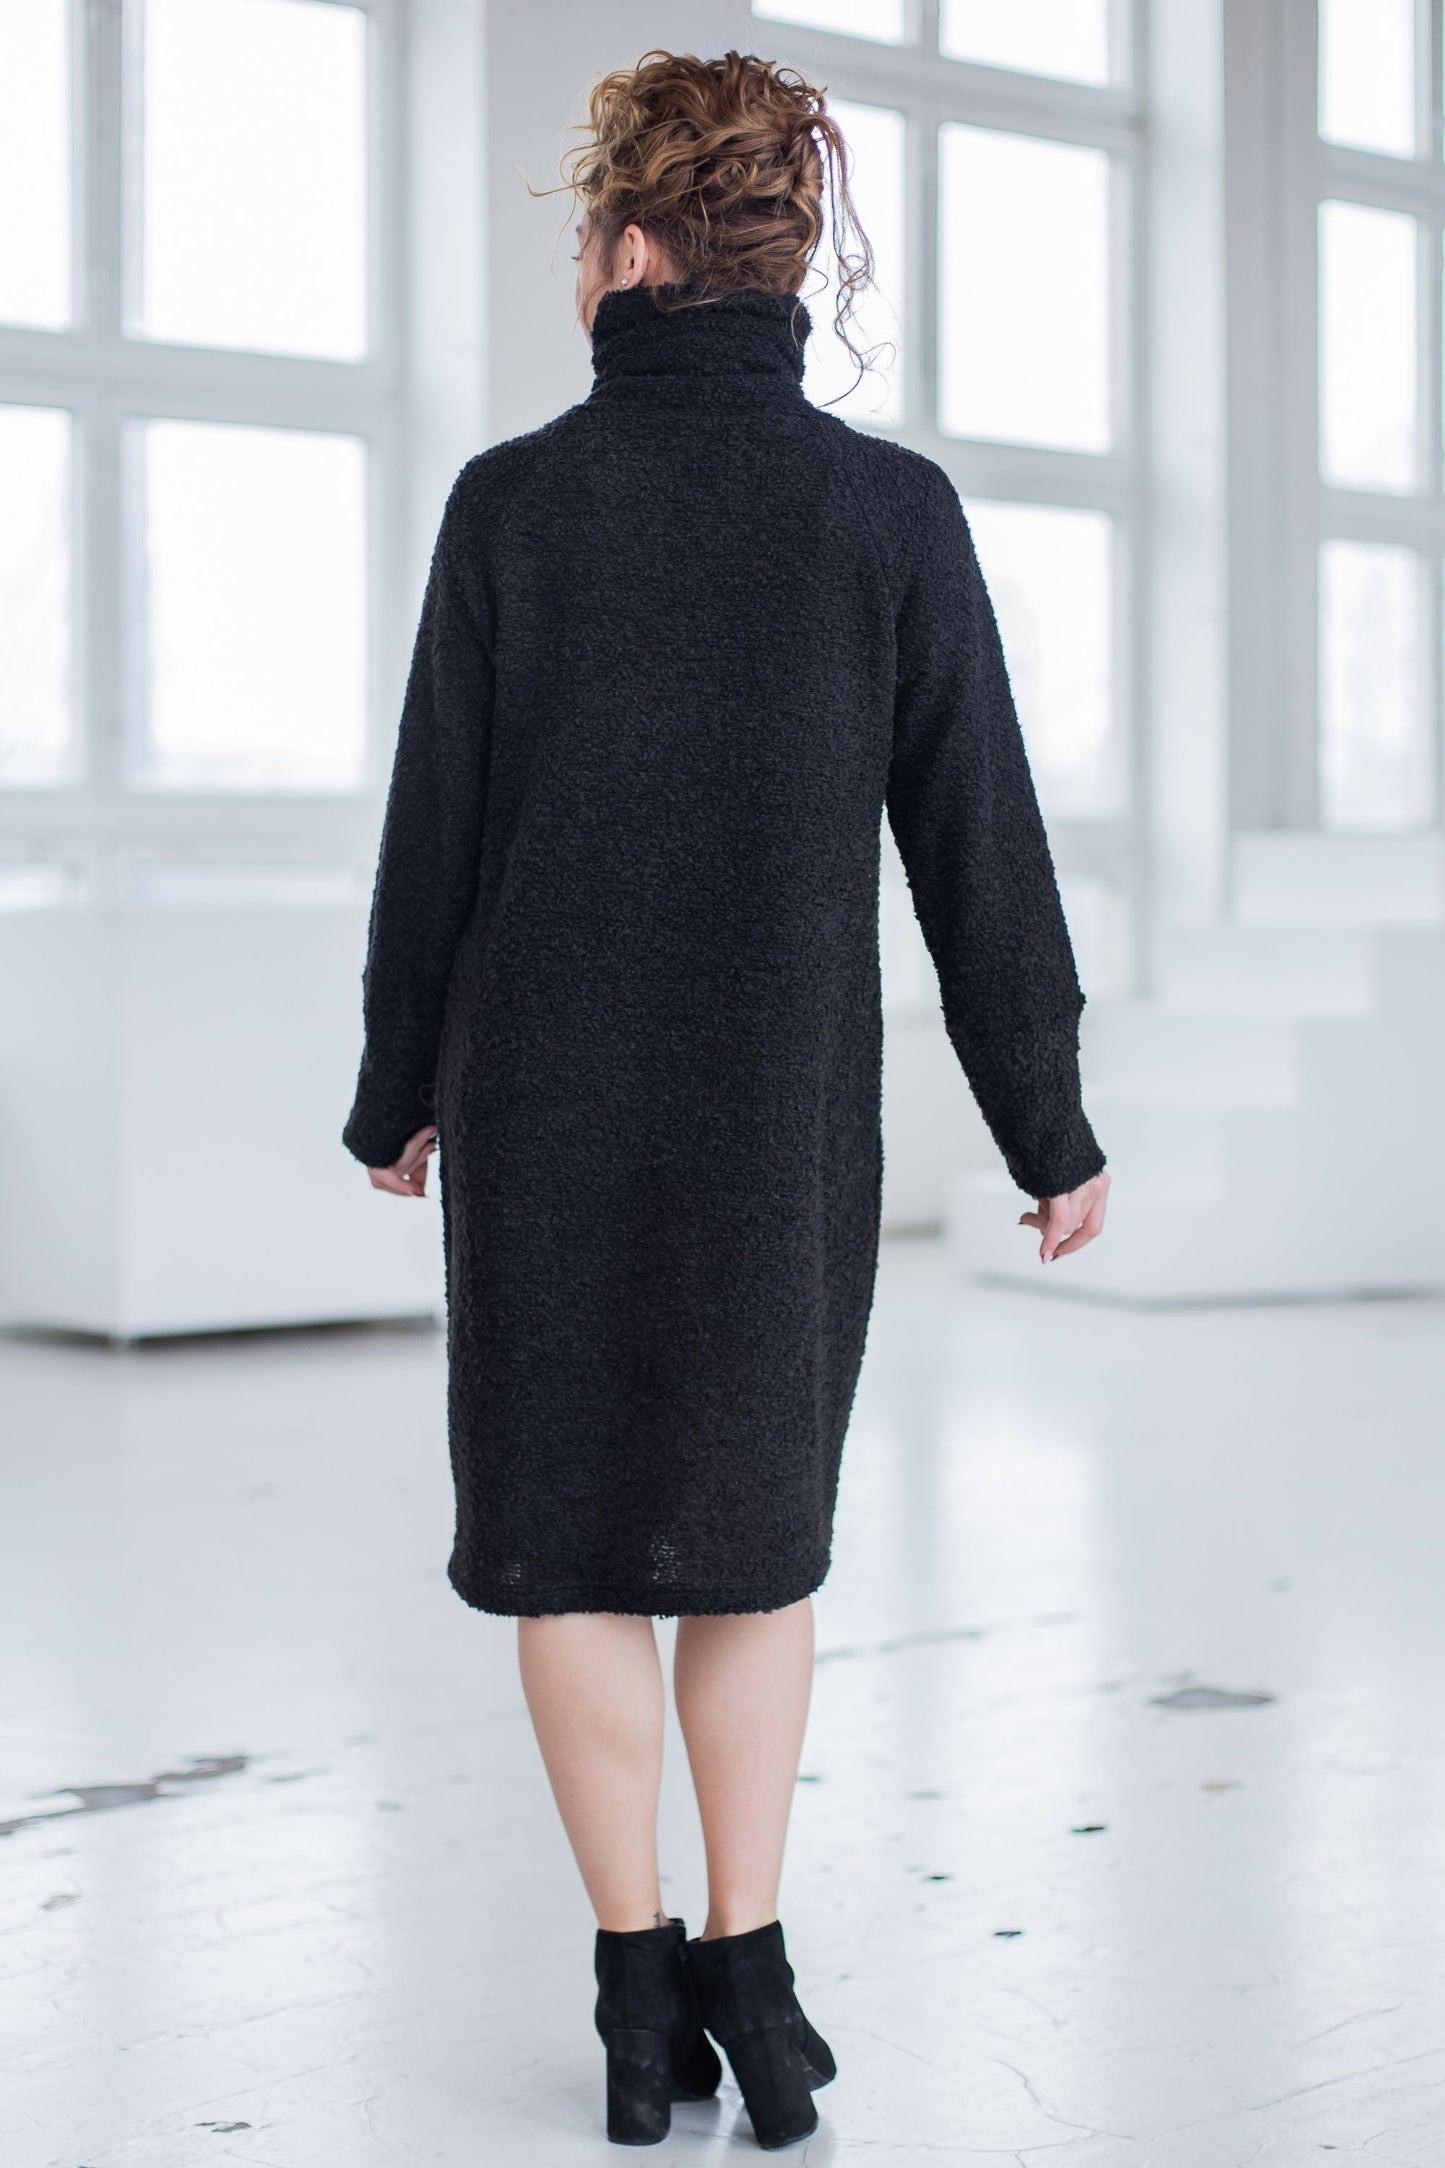 Half-length sweater / tunic made of wool fabric